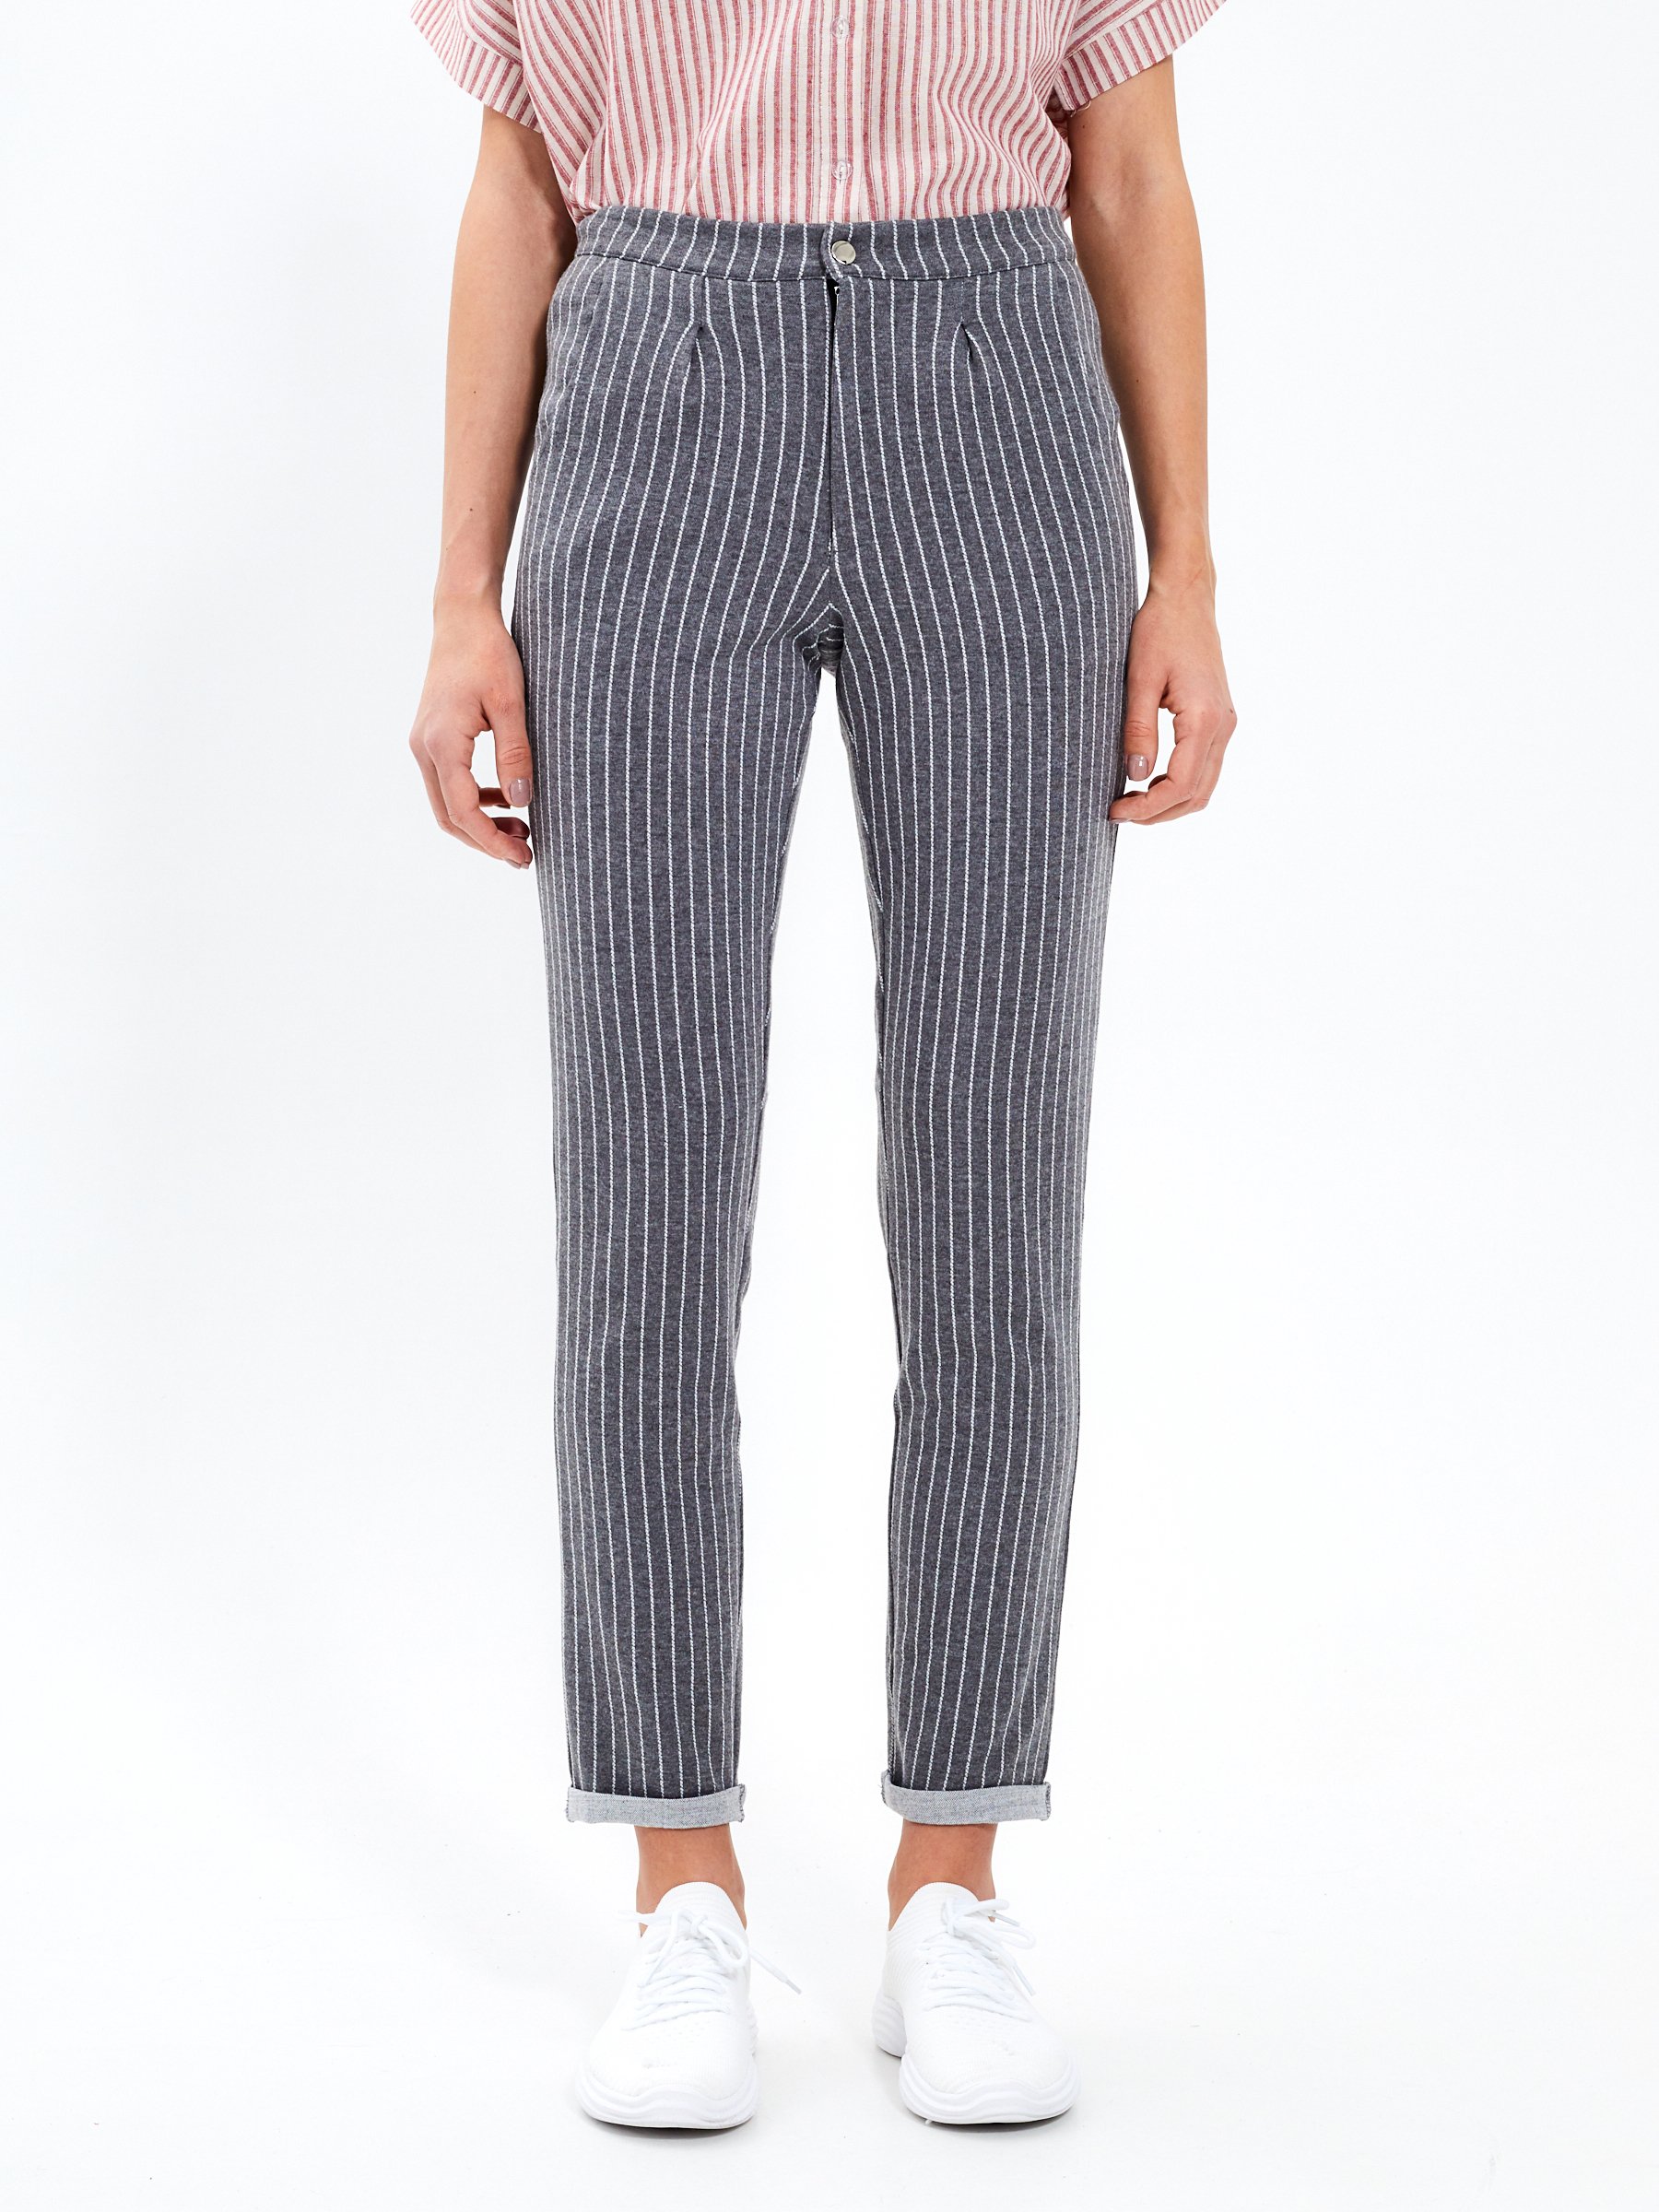 Girls Pants sz Small Black White Striped Drawstring Ruched Waist Straight  Leg | eBay